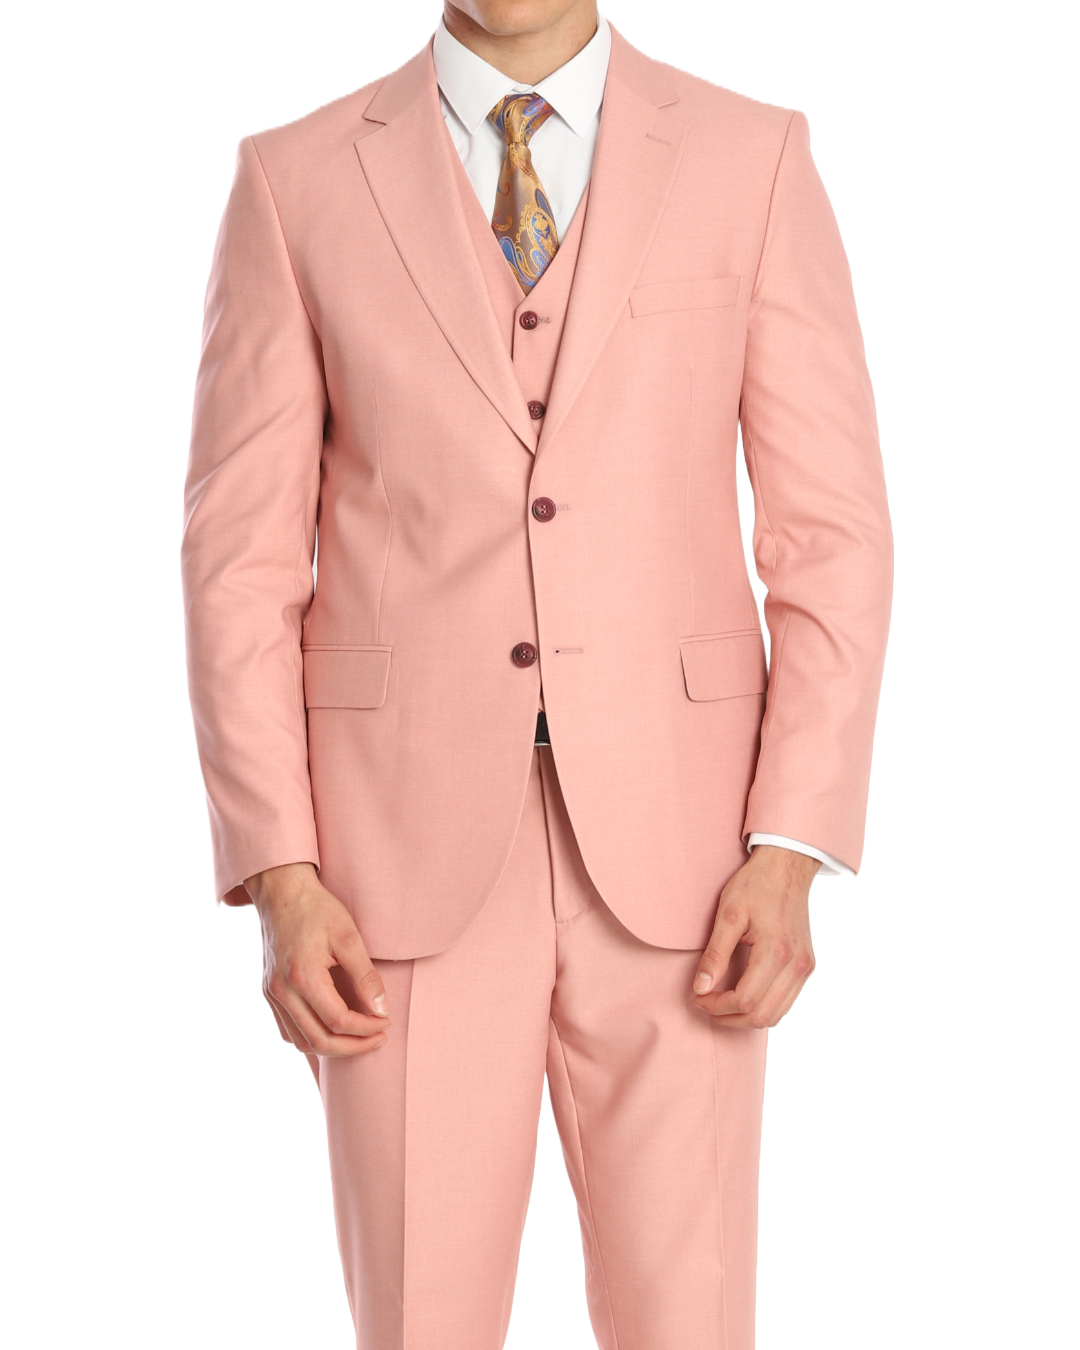 ICONY KEN - Pink Plain Three Piece Suit